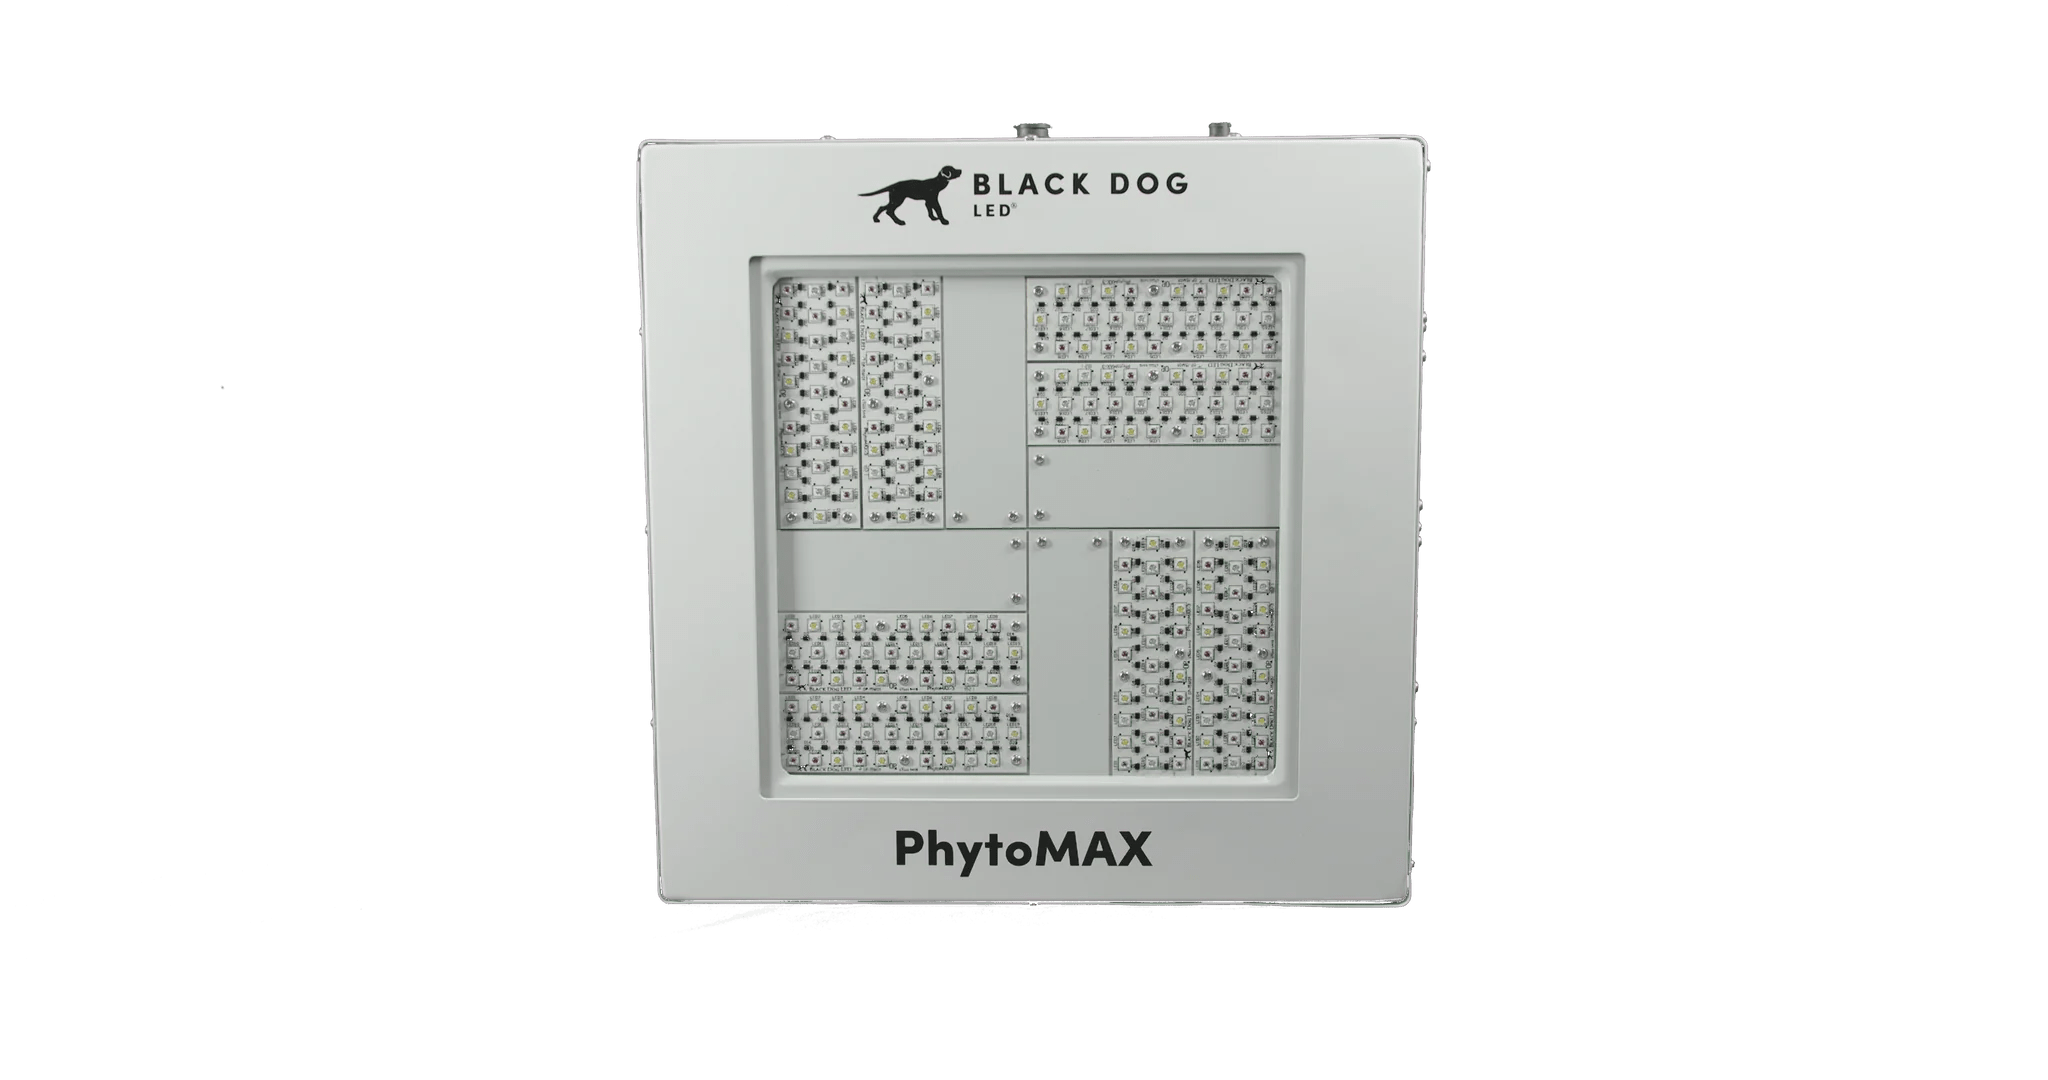 Black Dog PhytoMAX-4 8SC 500 Watt LED Grow Light - Green Thumb Depot